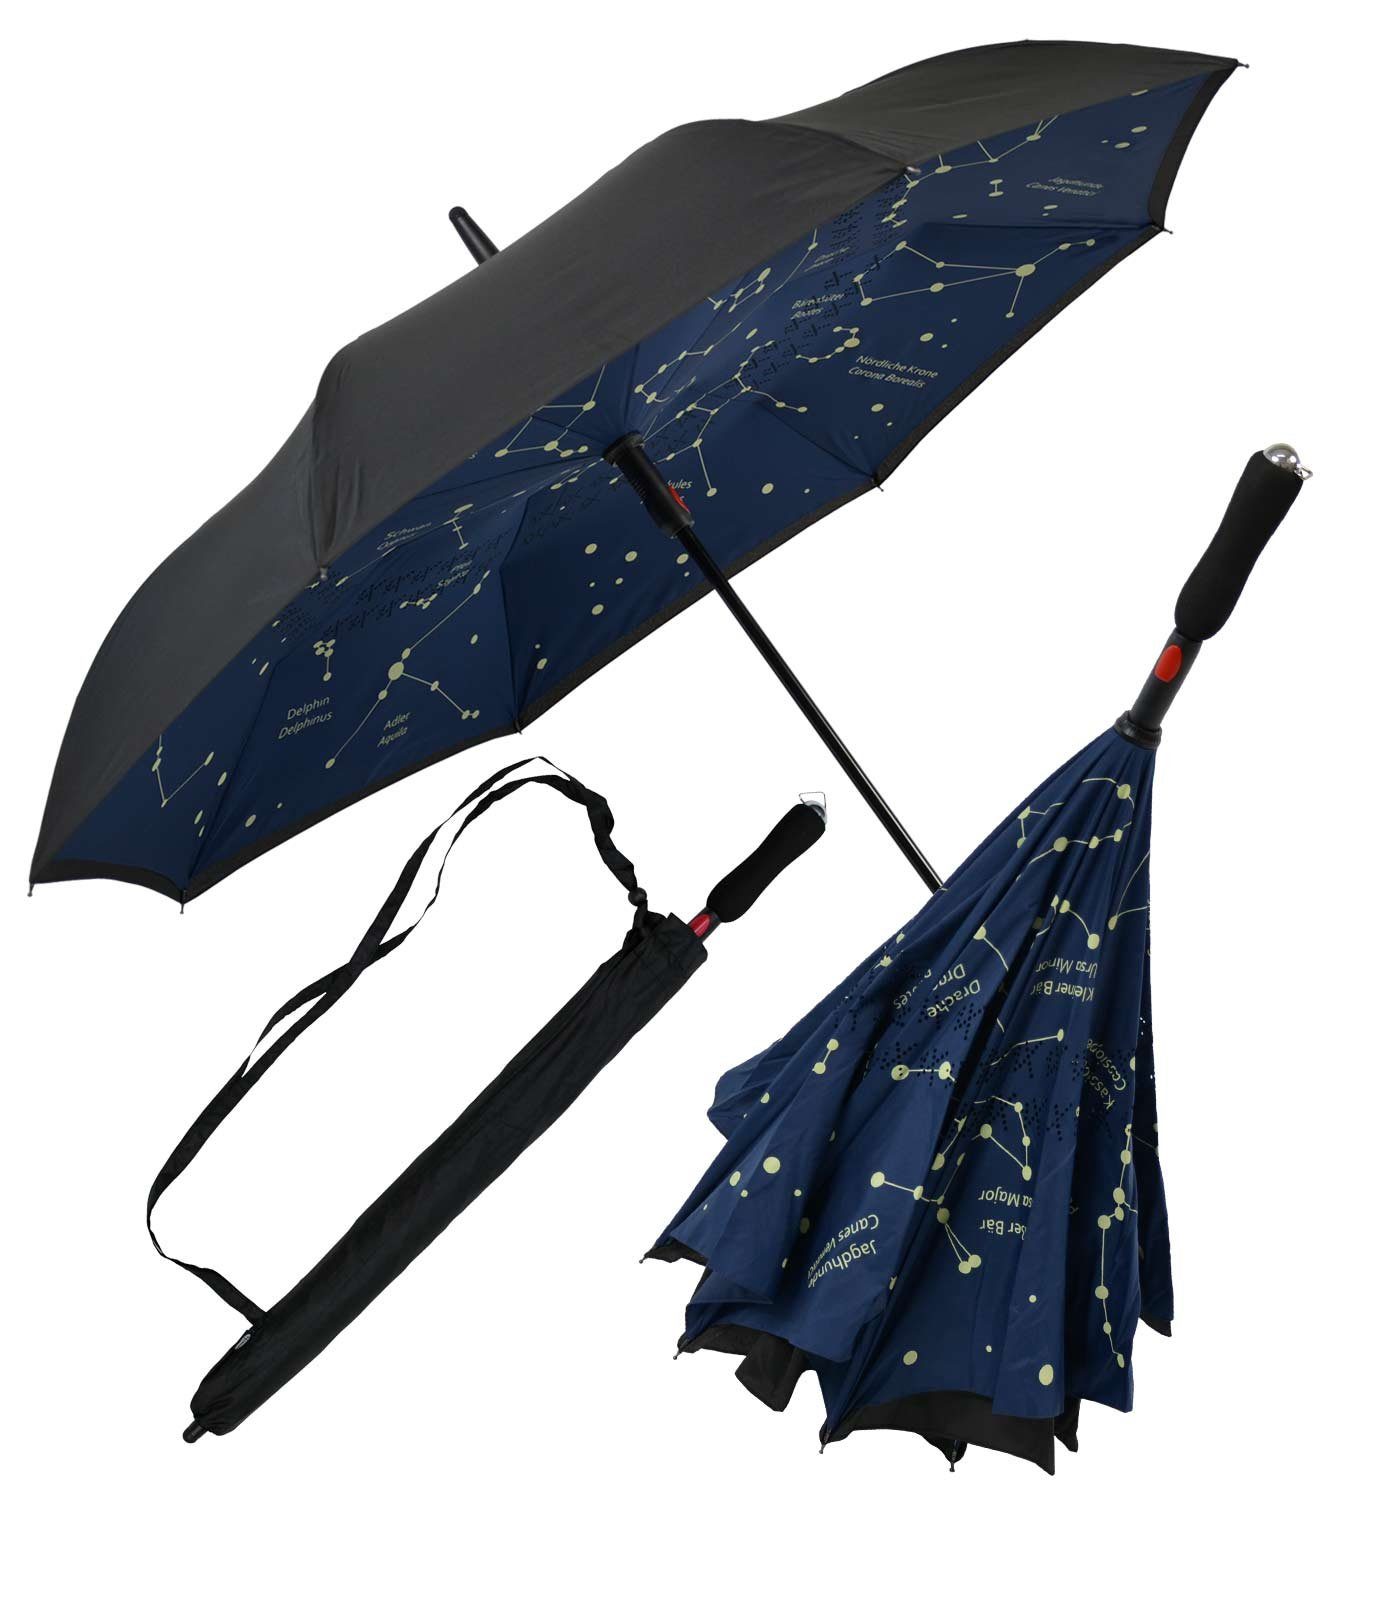 iX-brella Langregenschirm Reverse-Schirm - umgedreht zu öffnen mit Automatik, bedruckt